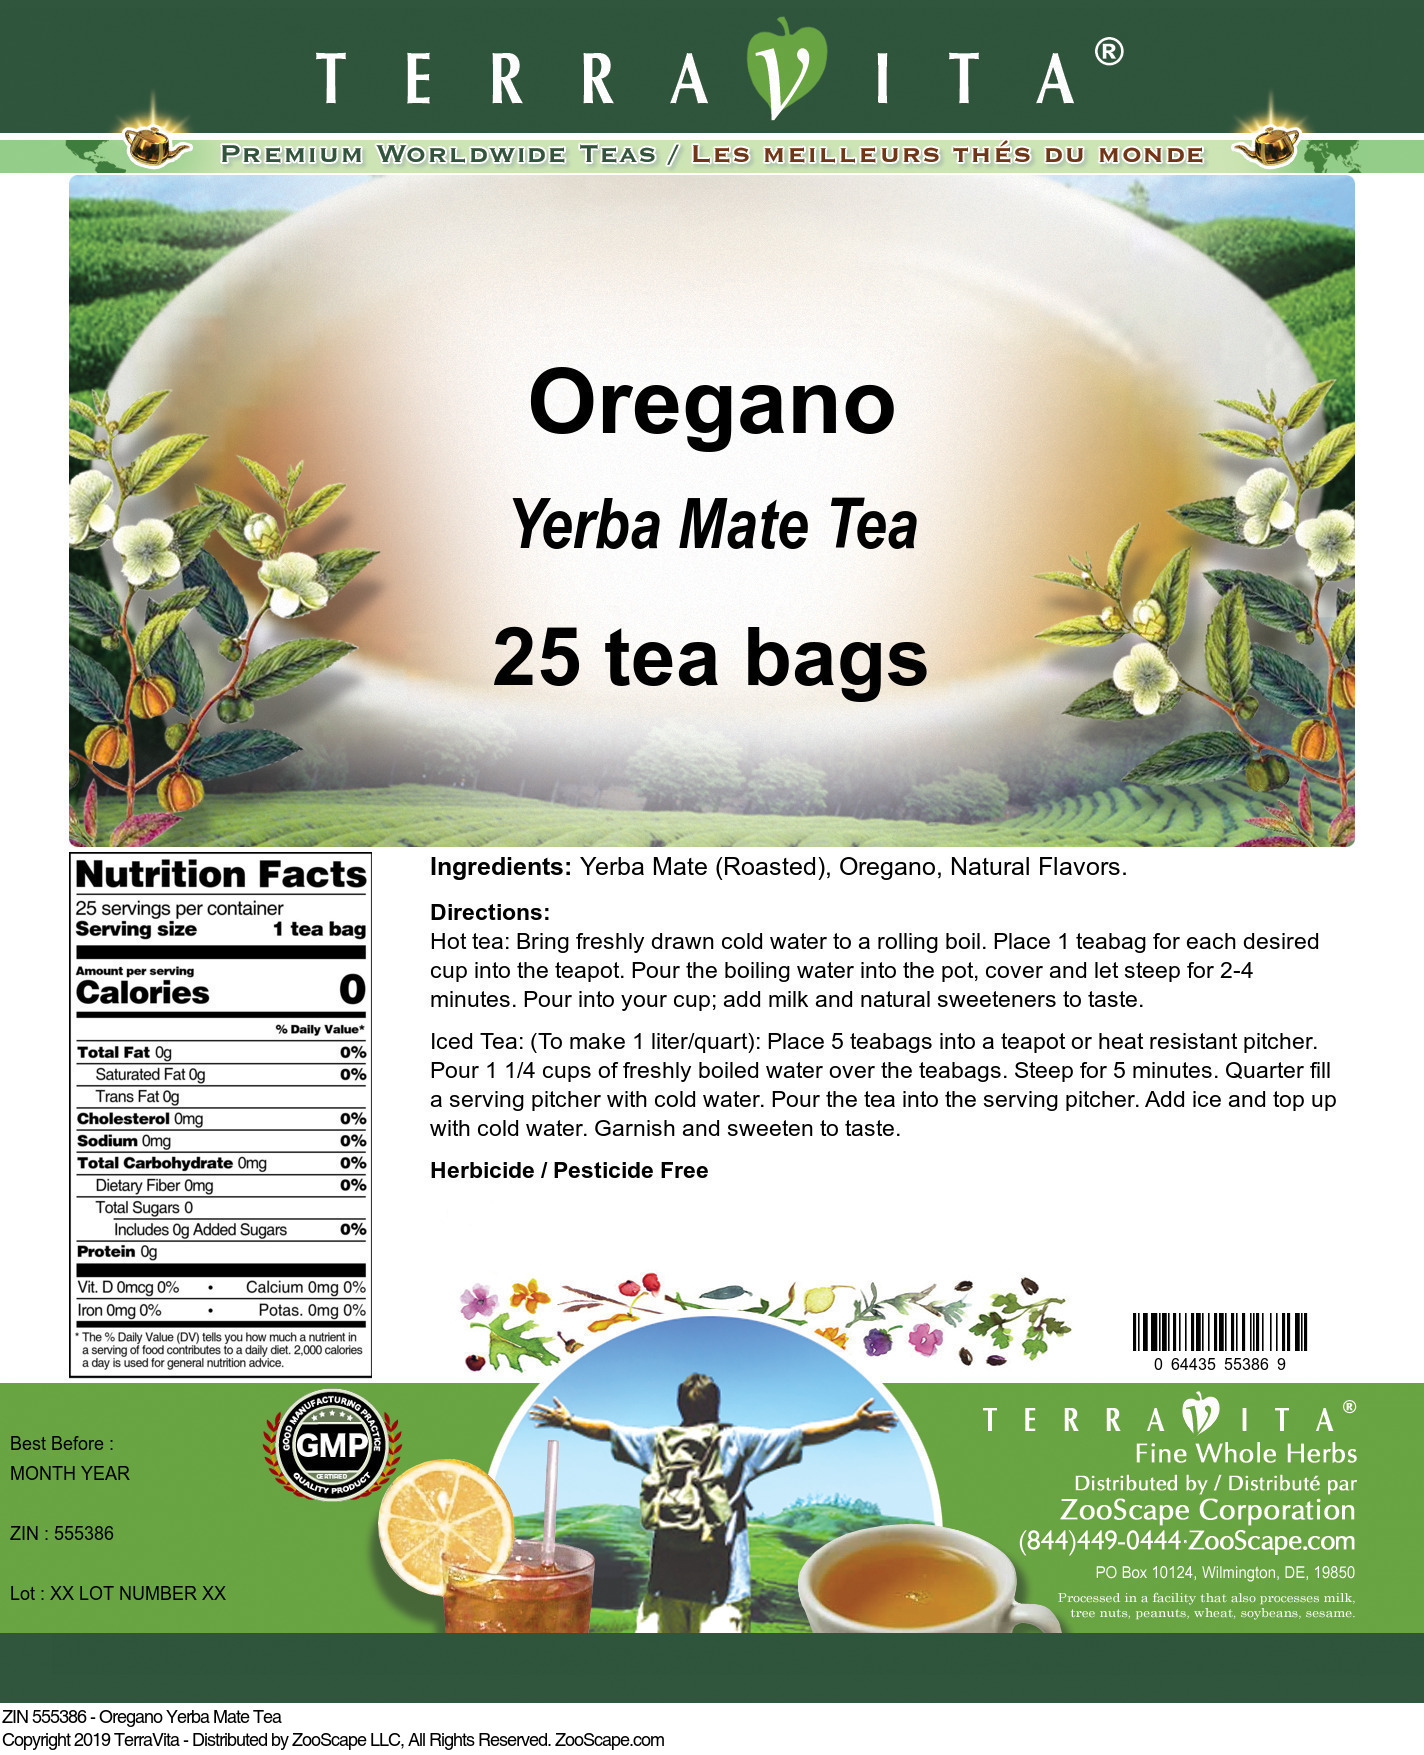 Oregano Yerba Mate Tea - Label